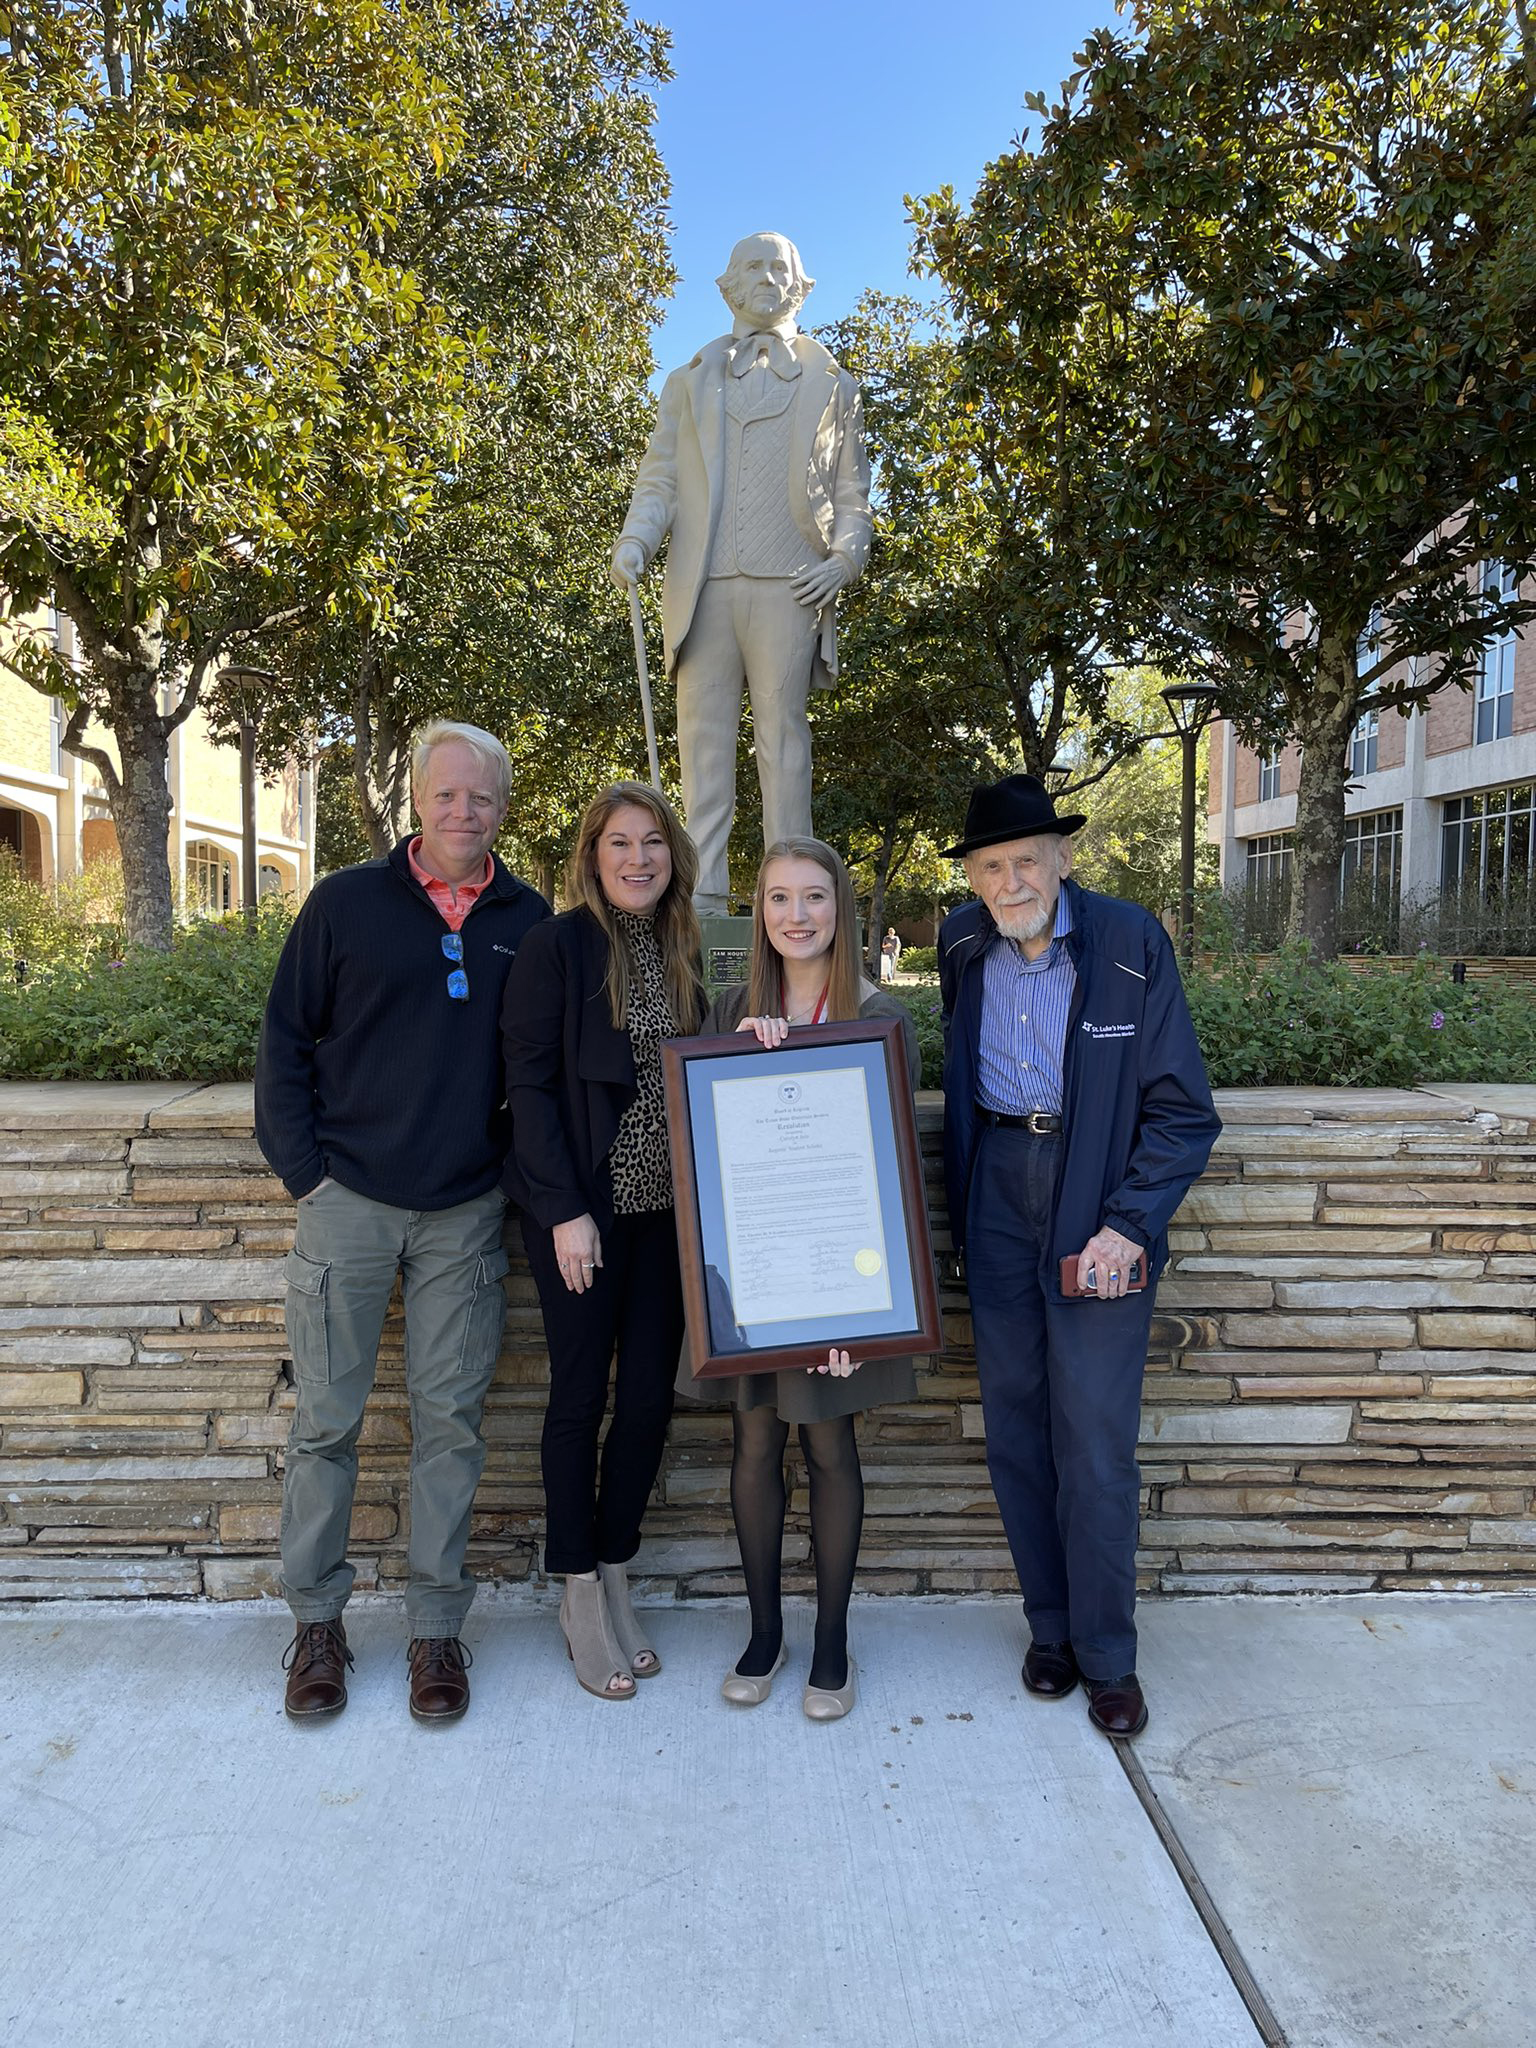 Jess with award by Sam Houston statue